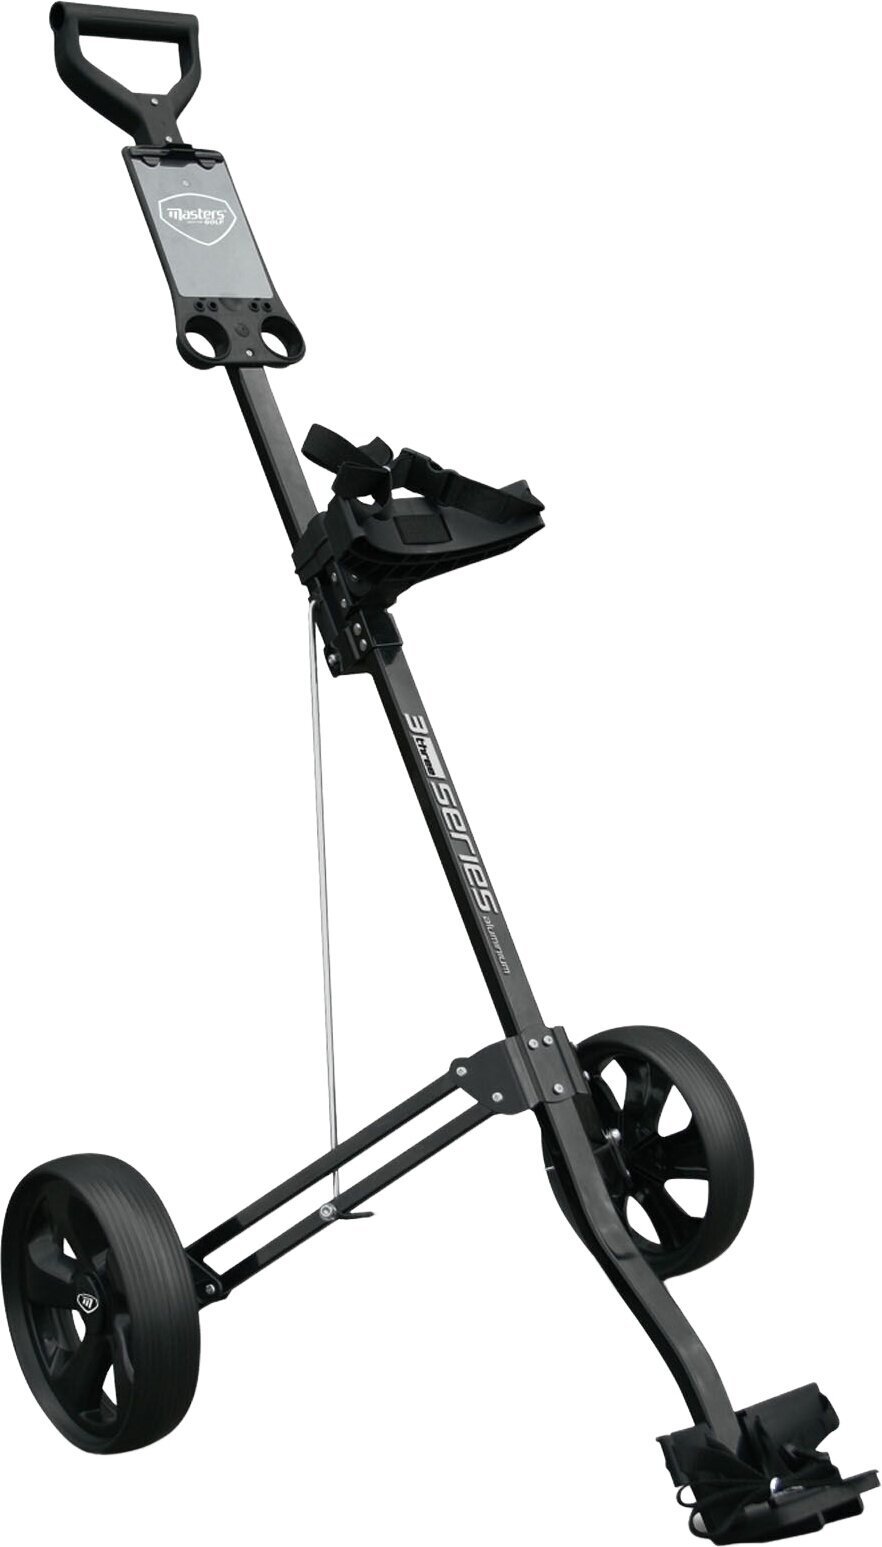 Masters Golf 3 Series Aluminium 2 Wheel Pull Trolley Black Manuální golfové vozíky Masters Golf